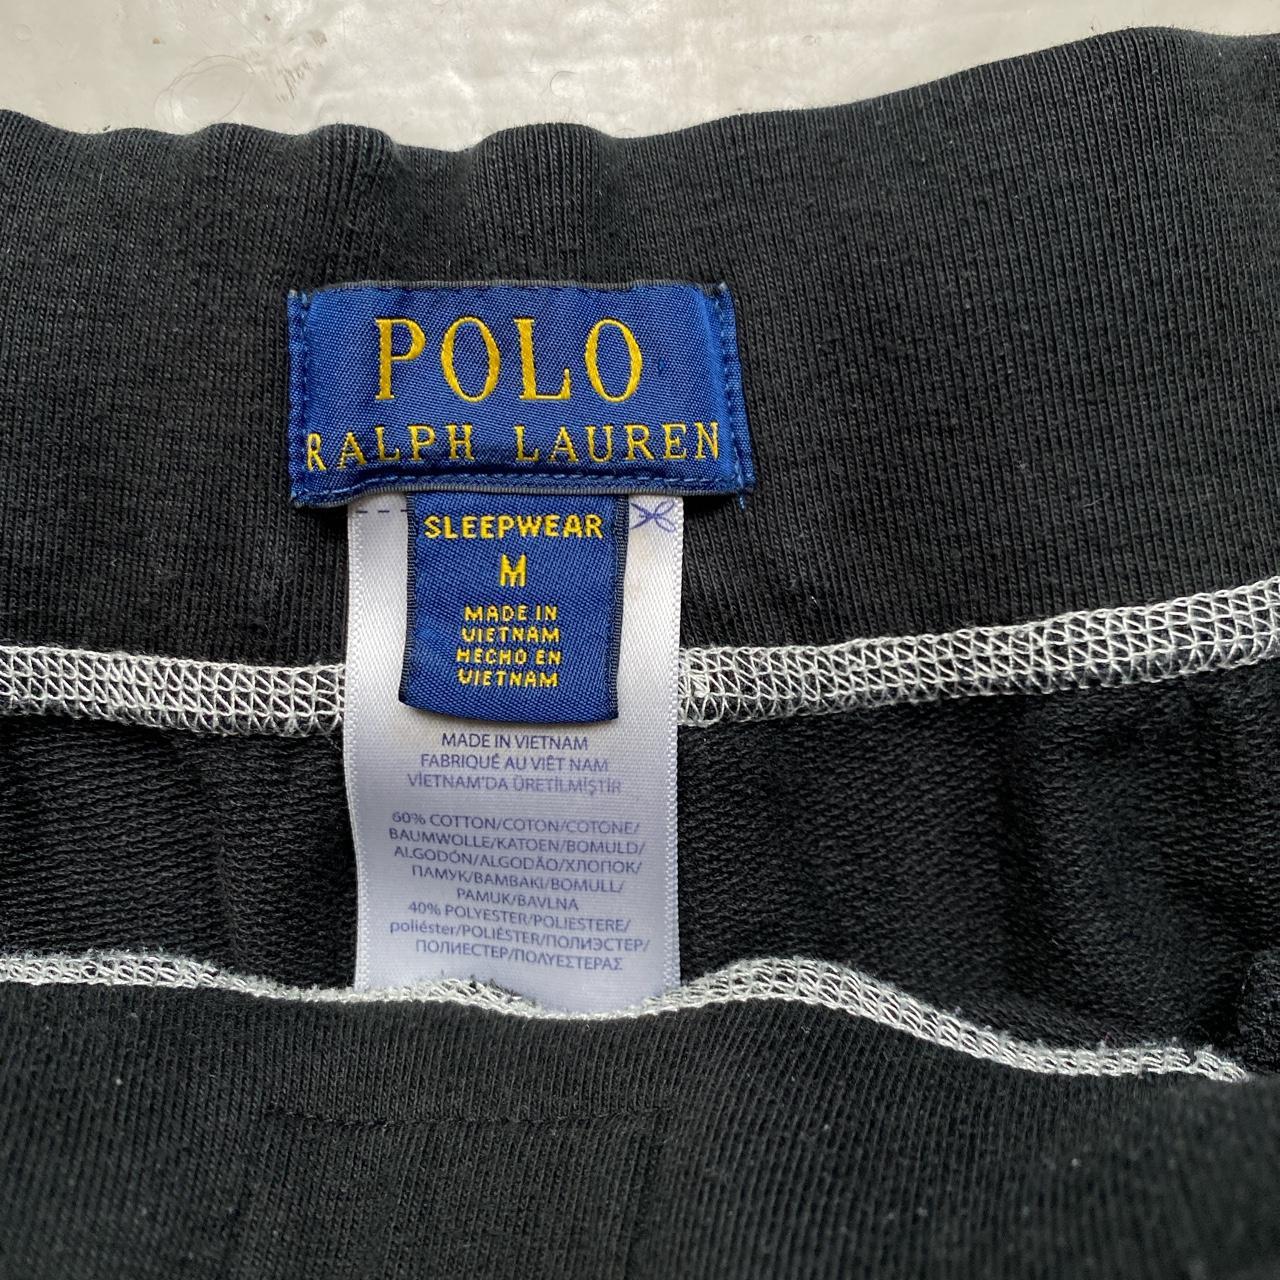 Polo Ralph Lauren Black and White Shorts